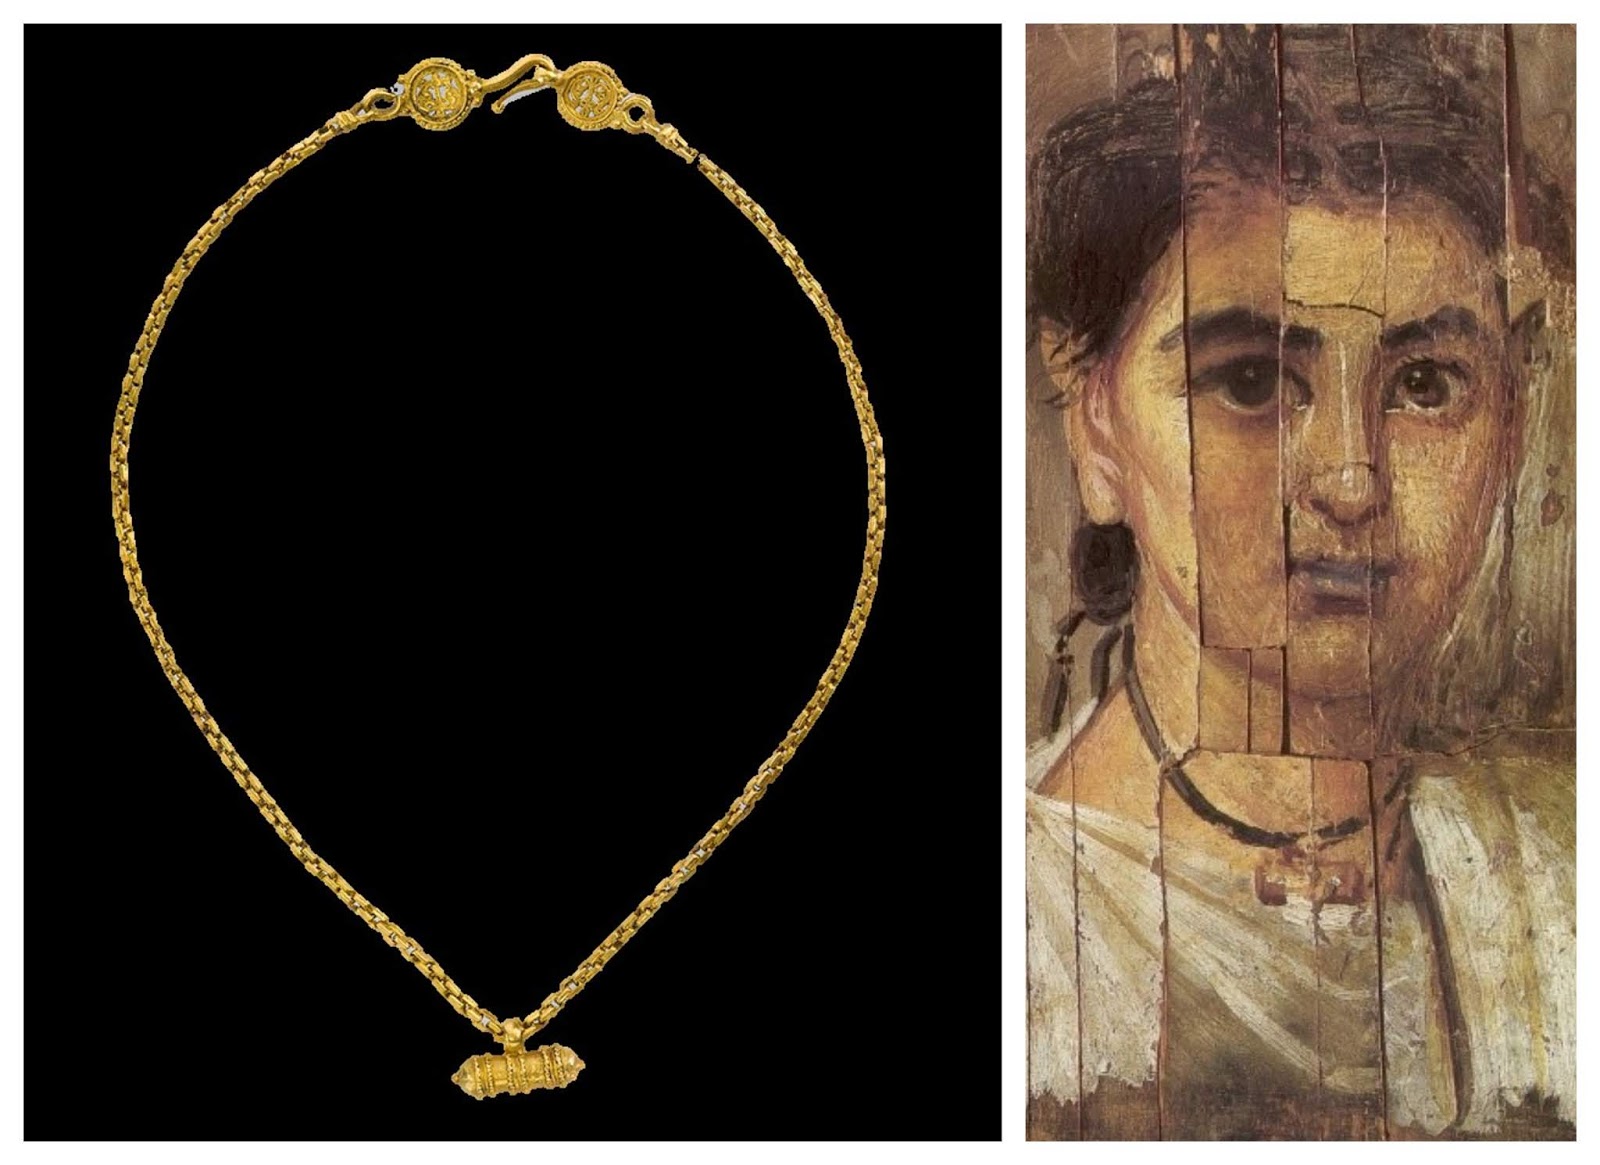 DOMVS ROMANA: Fascinum, amuletos contra el mal de ojo en la antigua Roma